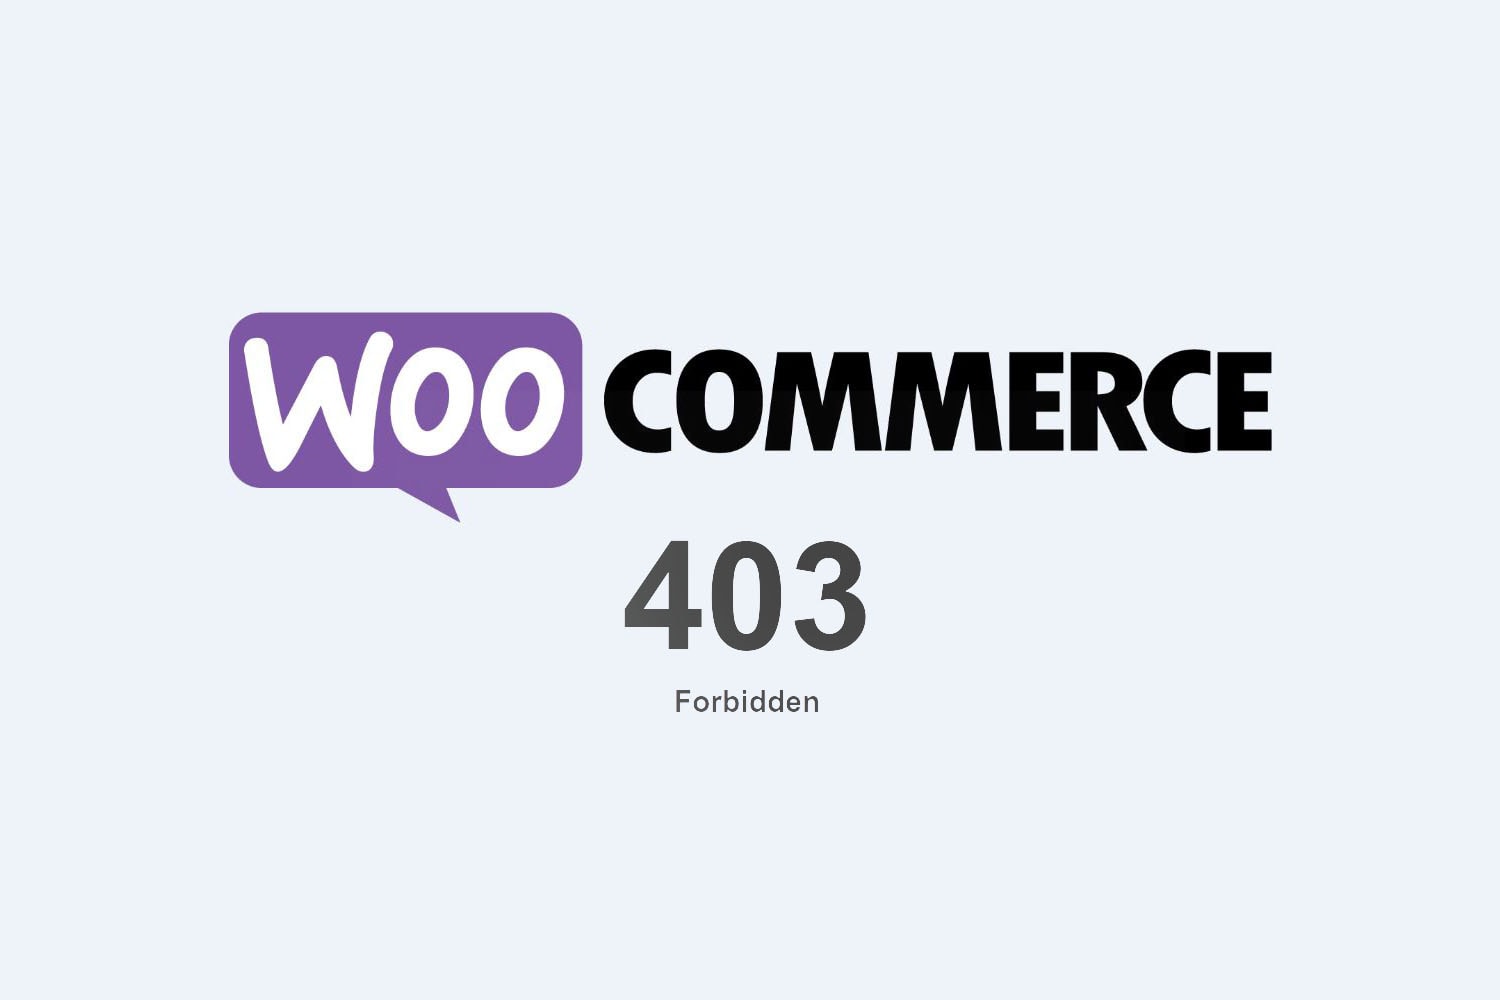 woocommerce 403 error